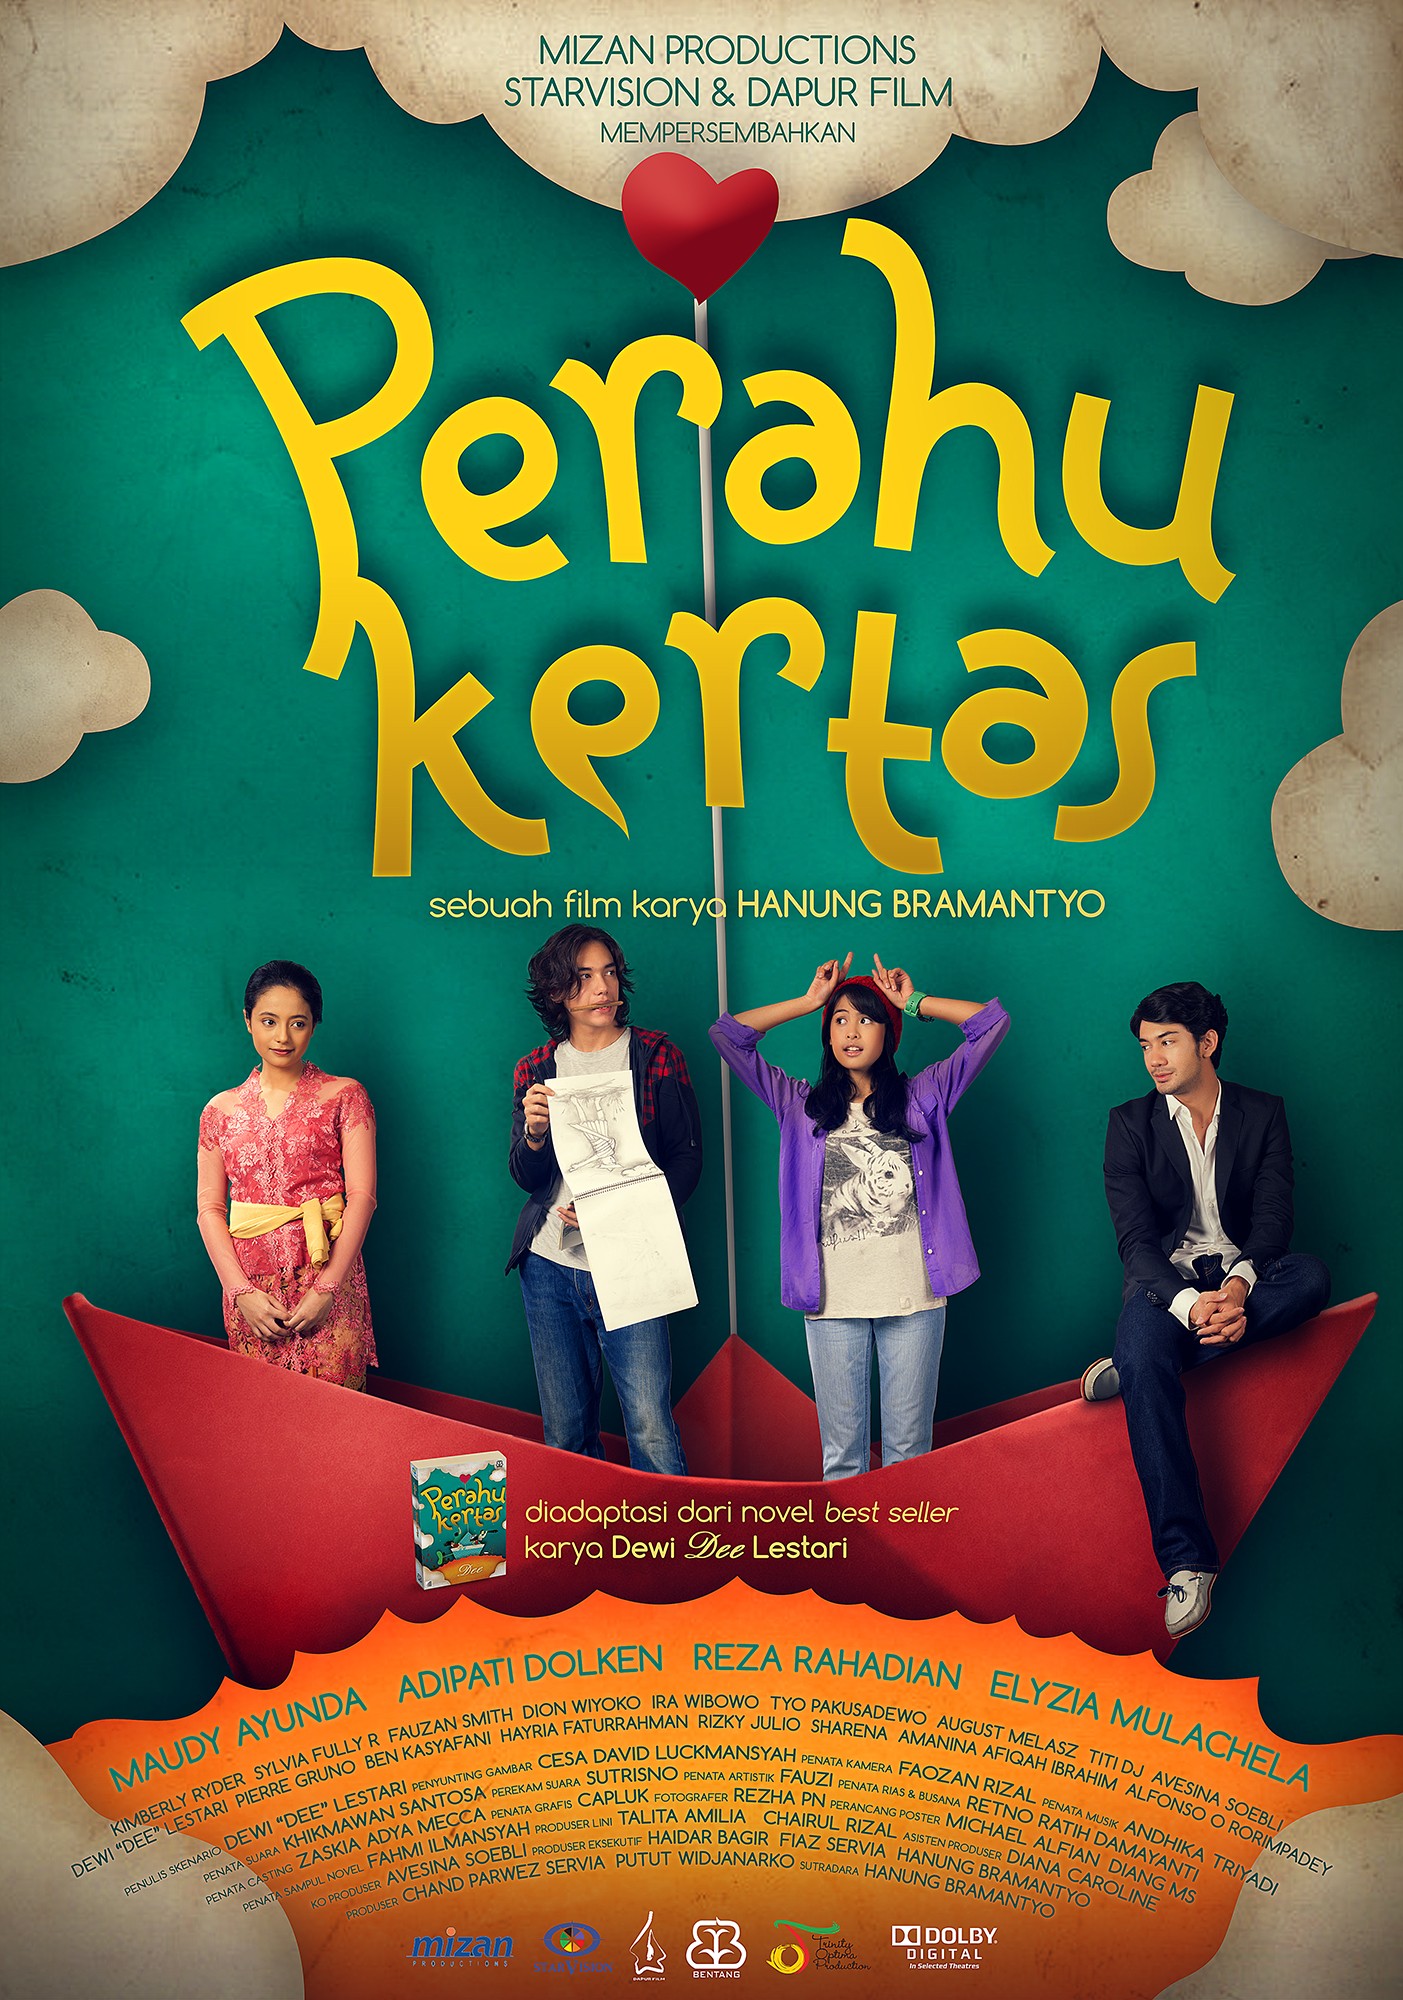 Mega Sized Movie Poster Image for Perahu kertas 